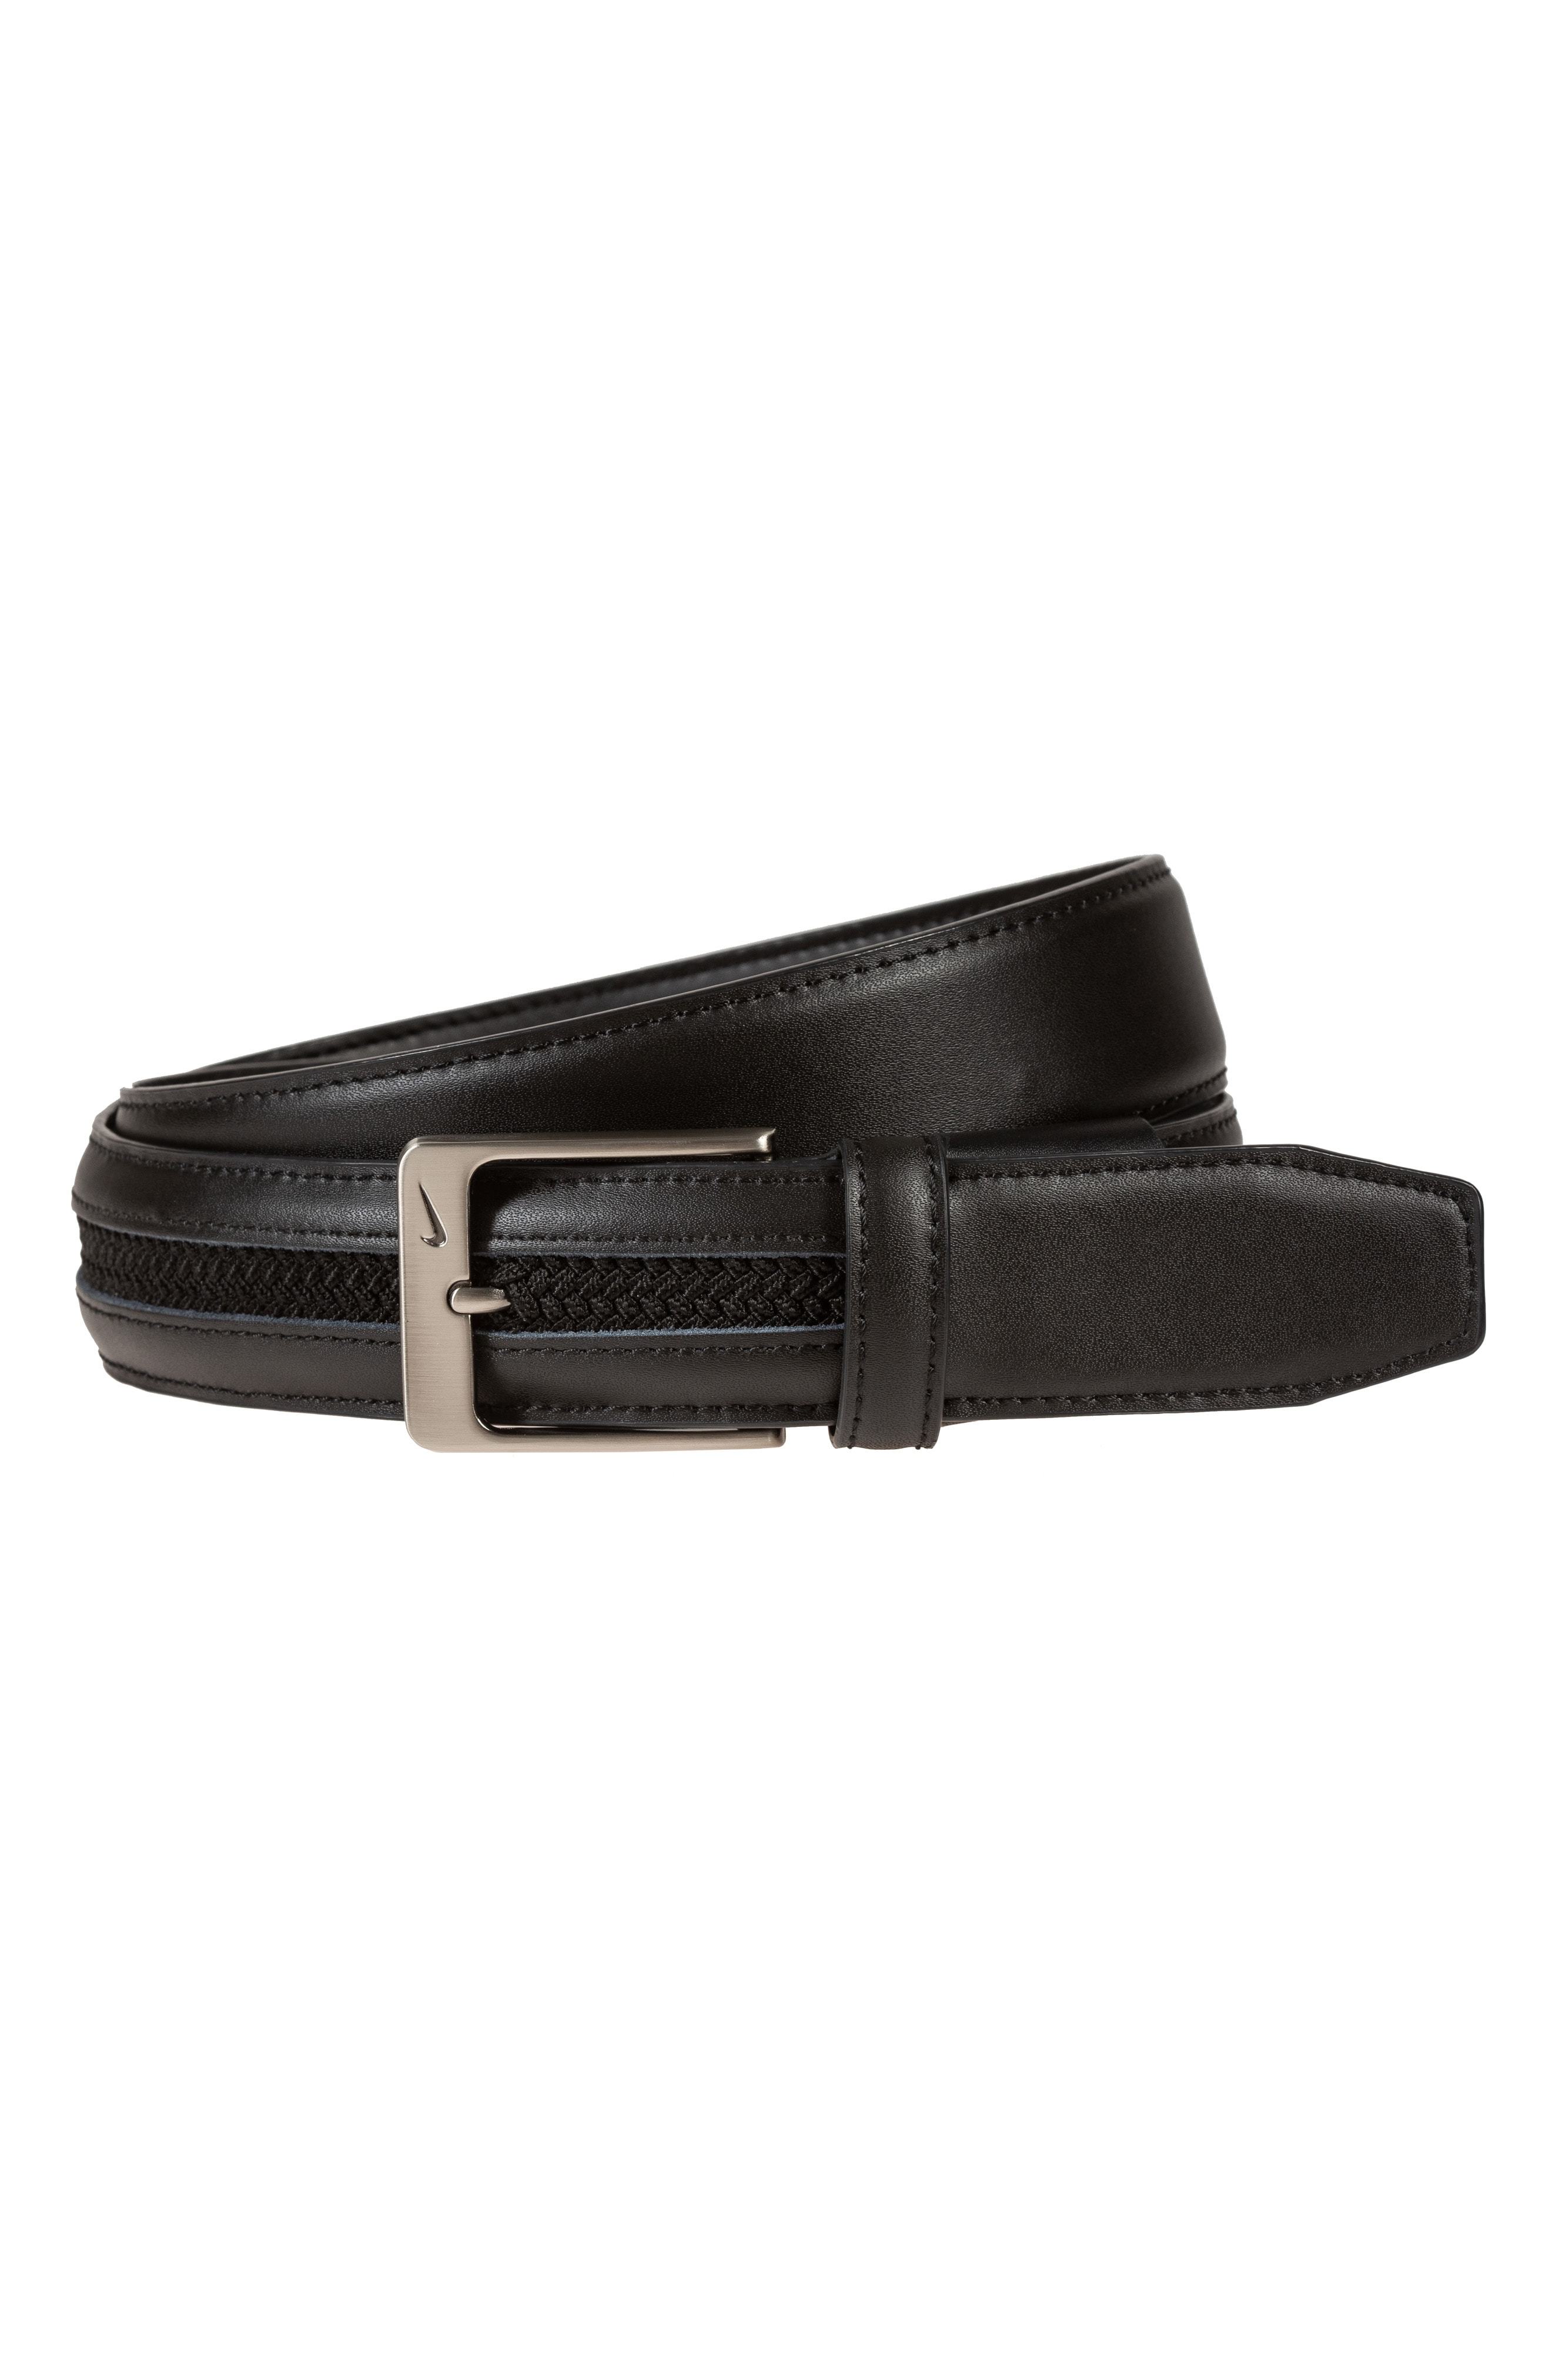 nike leather woven g flex belt